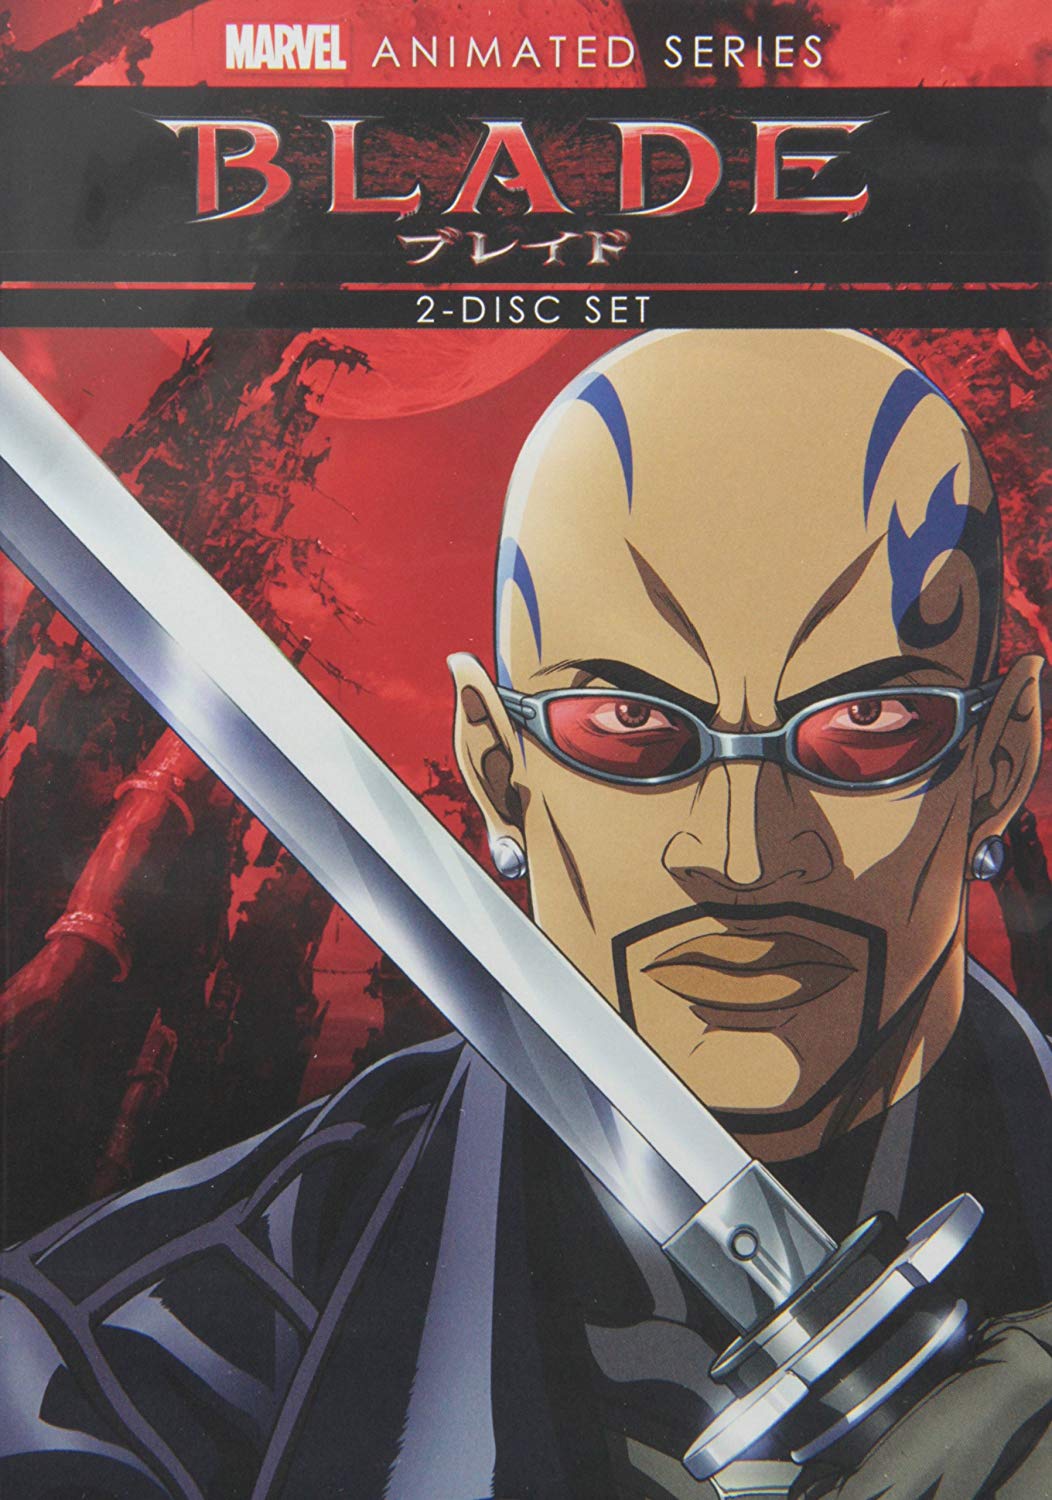 Blade - 2011 Anime - Animated Series - DVD